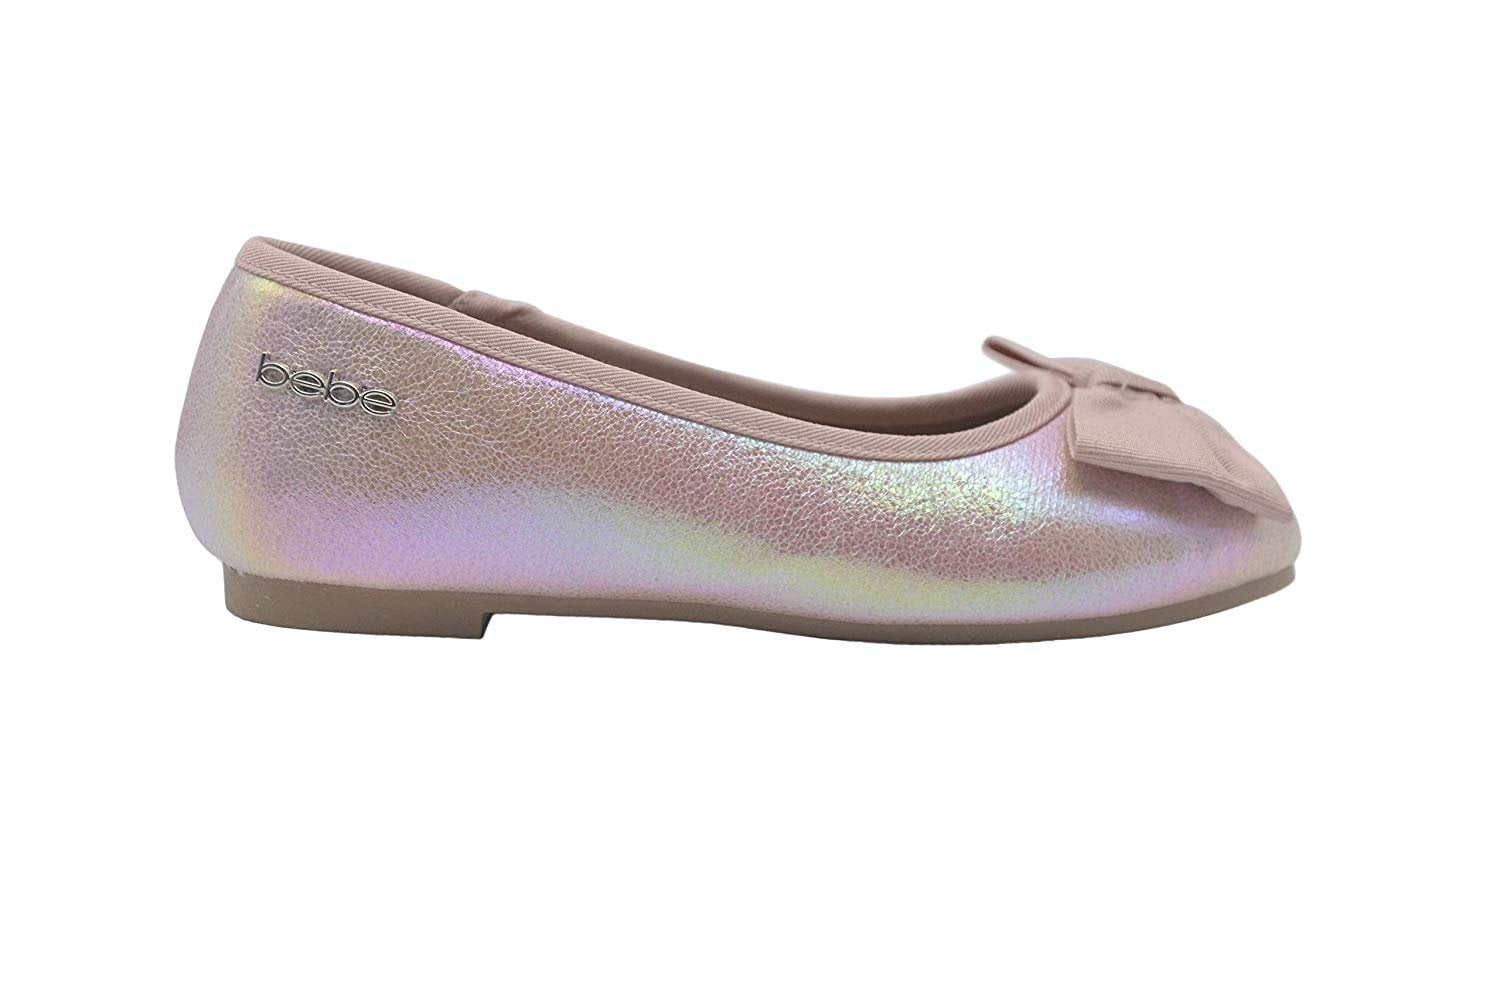 GESELLIE Girls Dress Rhinestone Mary Jane Ballerina Flat Shoes Toddler/Little Kid 